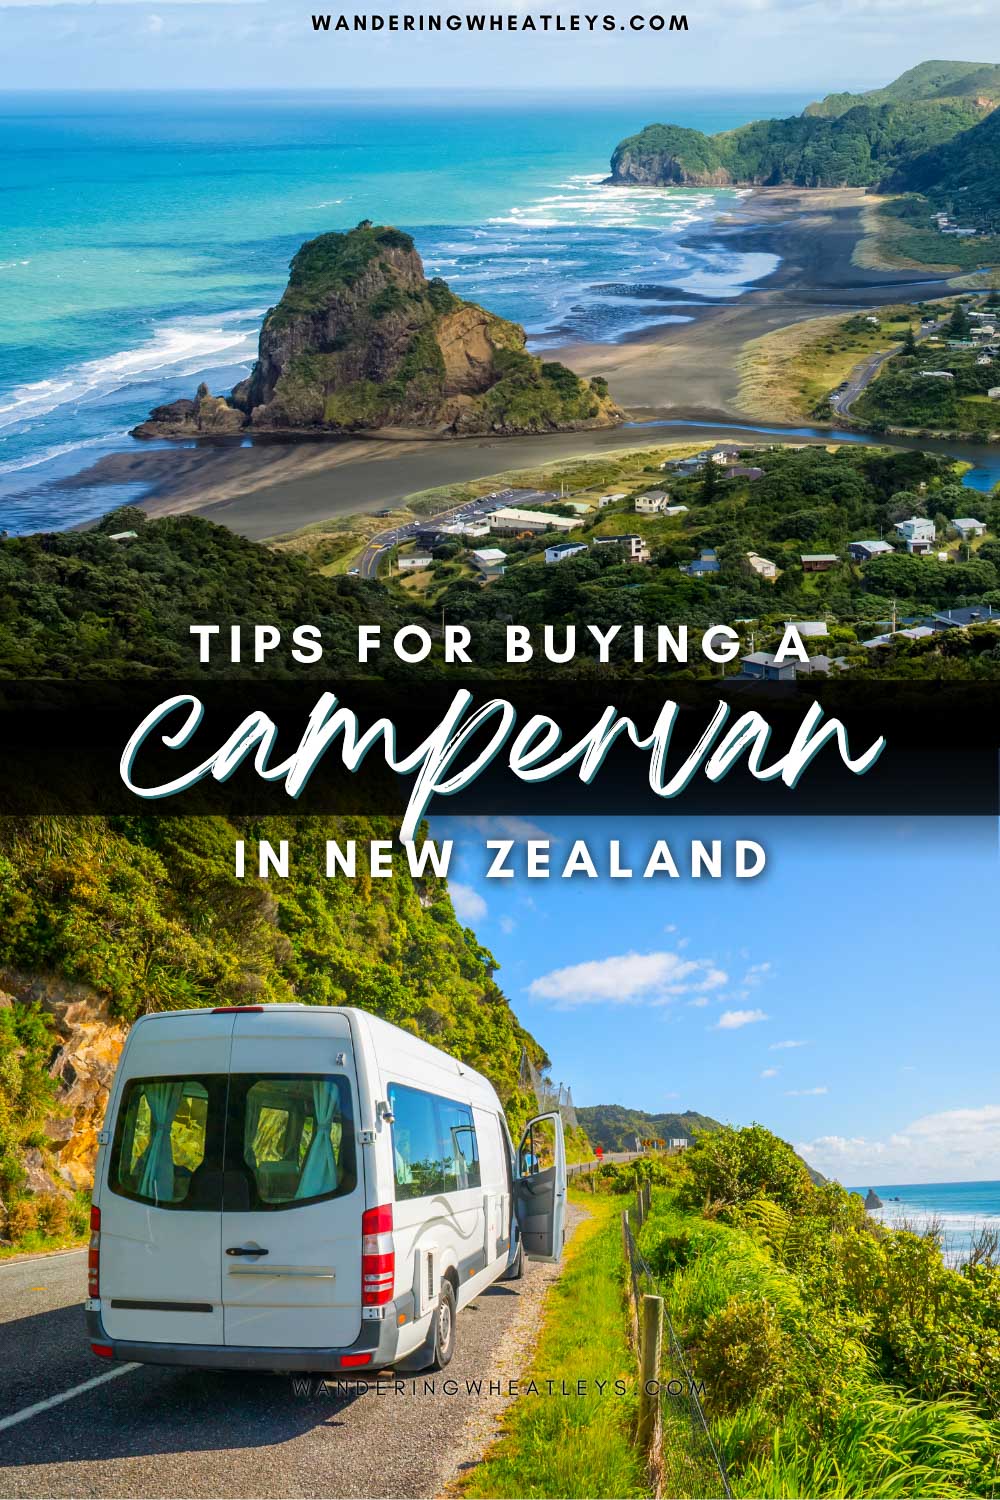 Tips for Buying a Camper Van in New Zealand